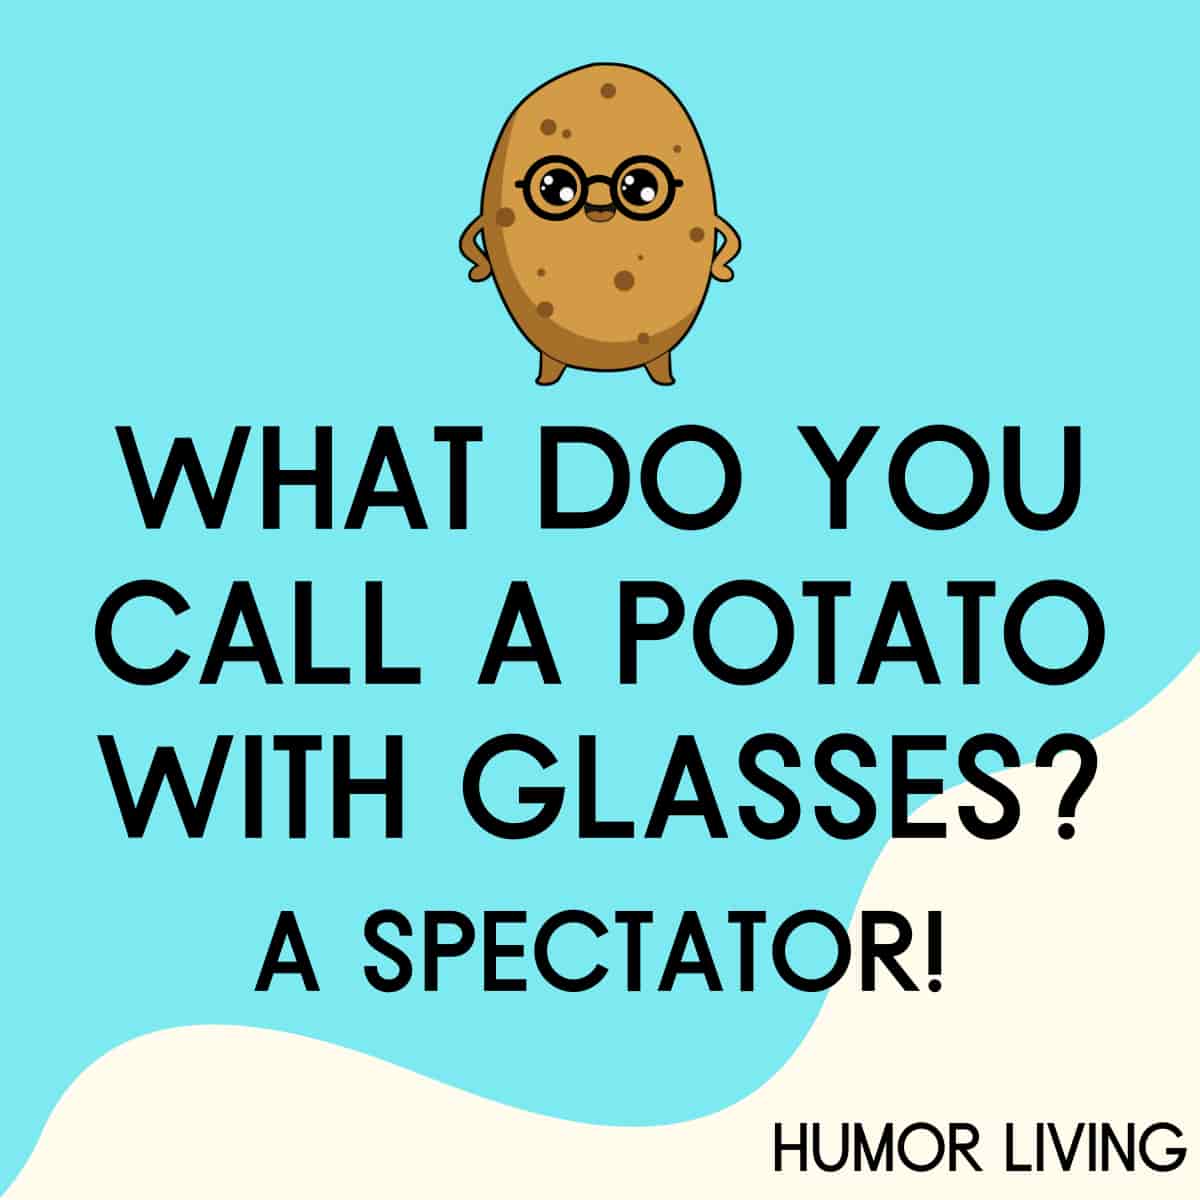 Potato with glasses.